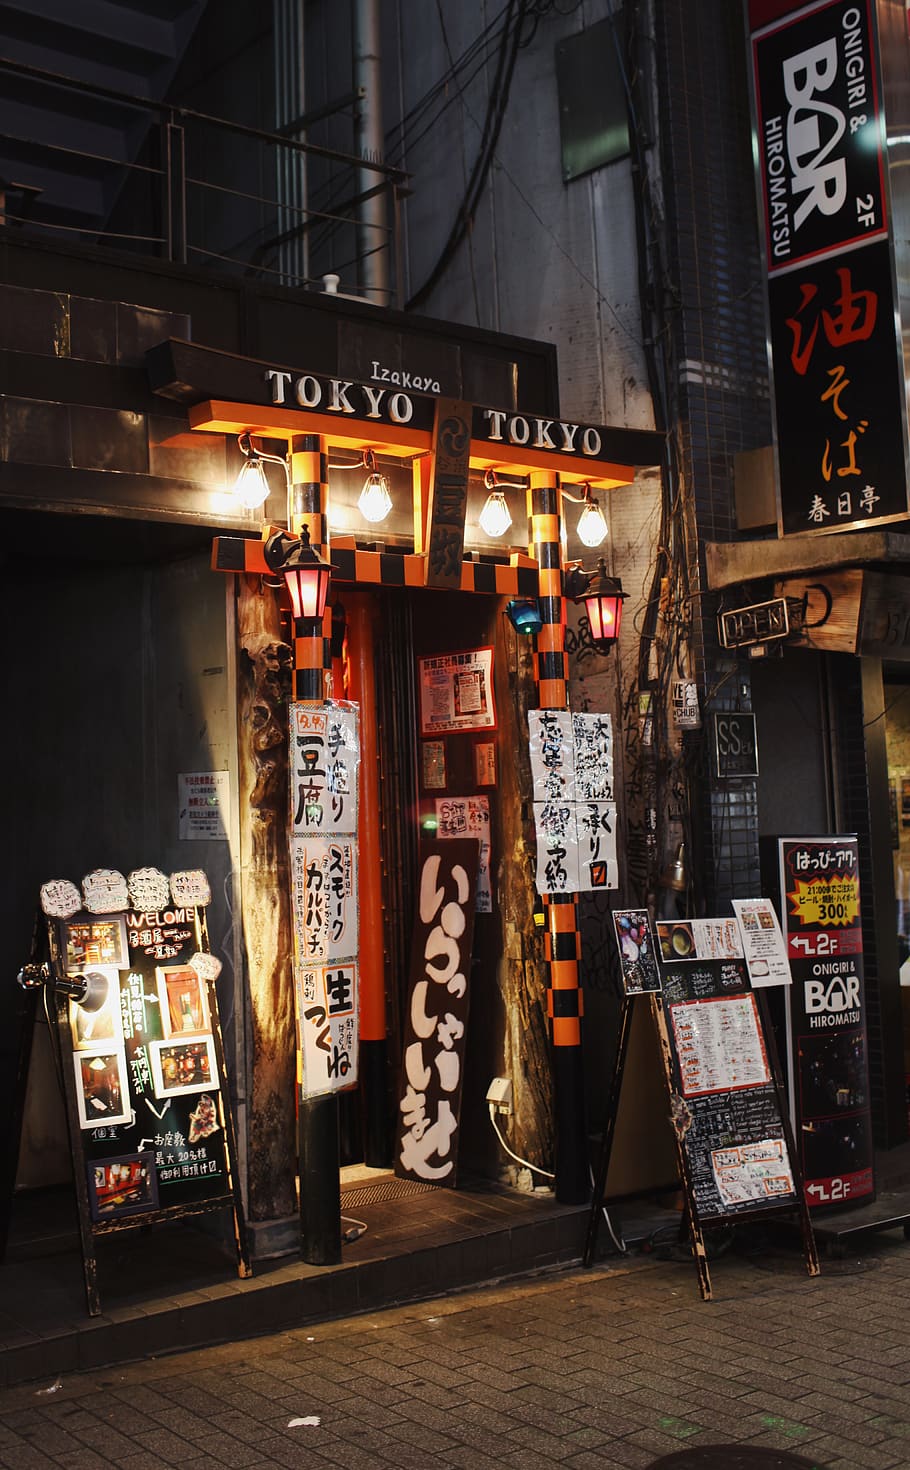 japan, restaurant, shibuya, tokyo, night, izakaya, text, illuminated